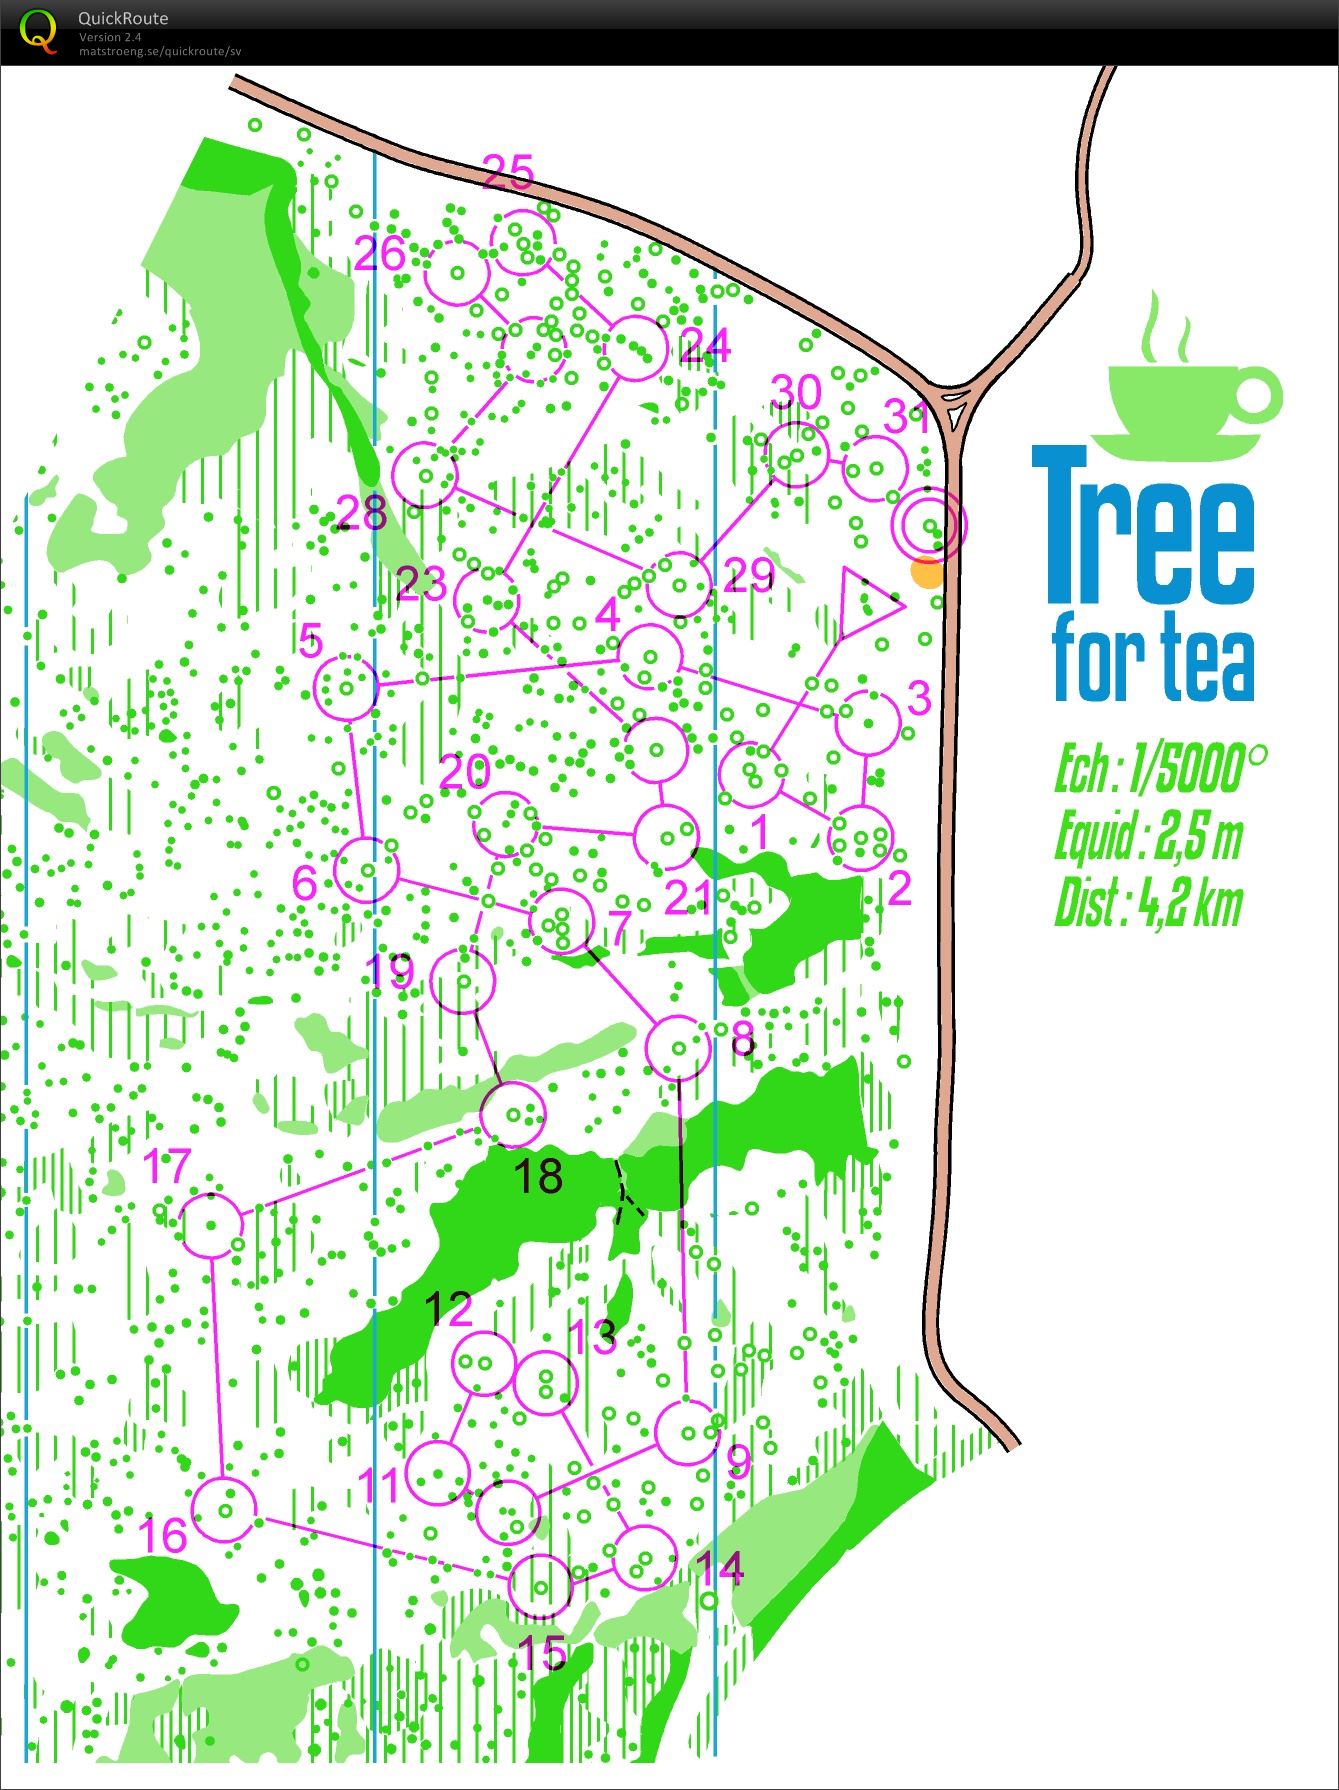 Tree for Tea (21-01-2016)